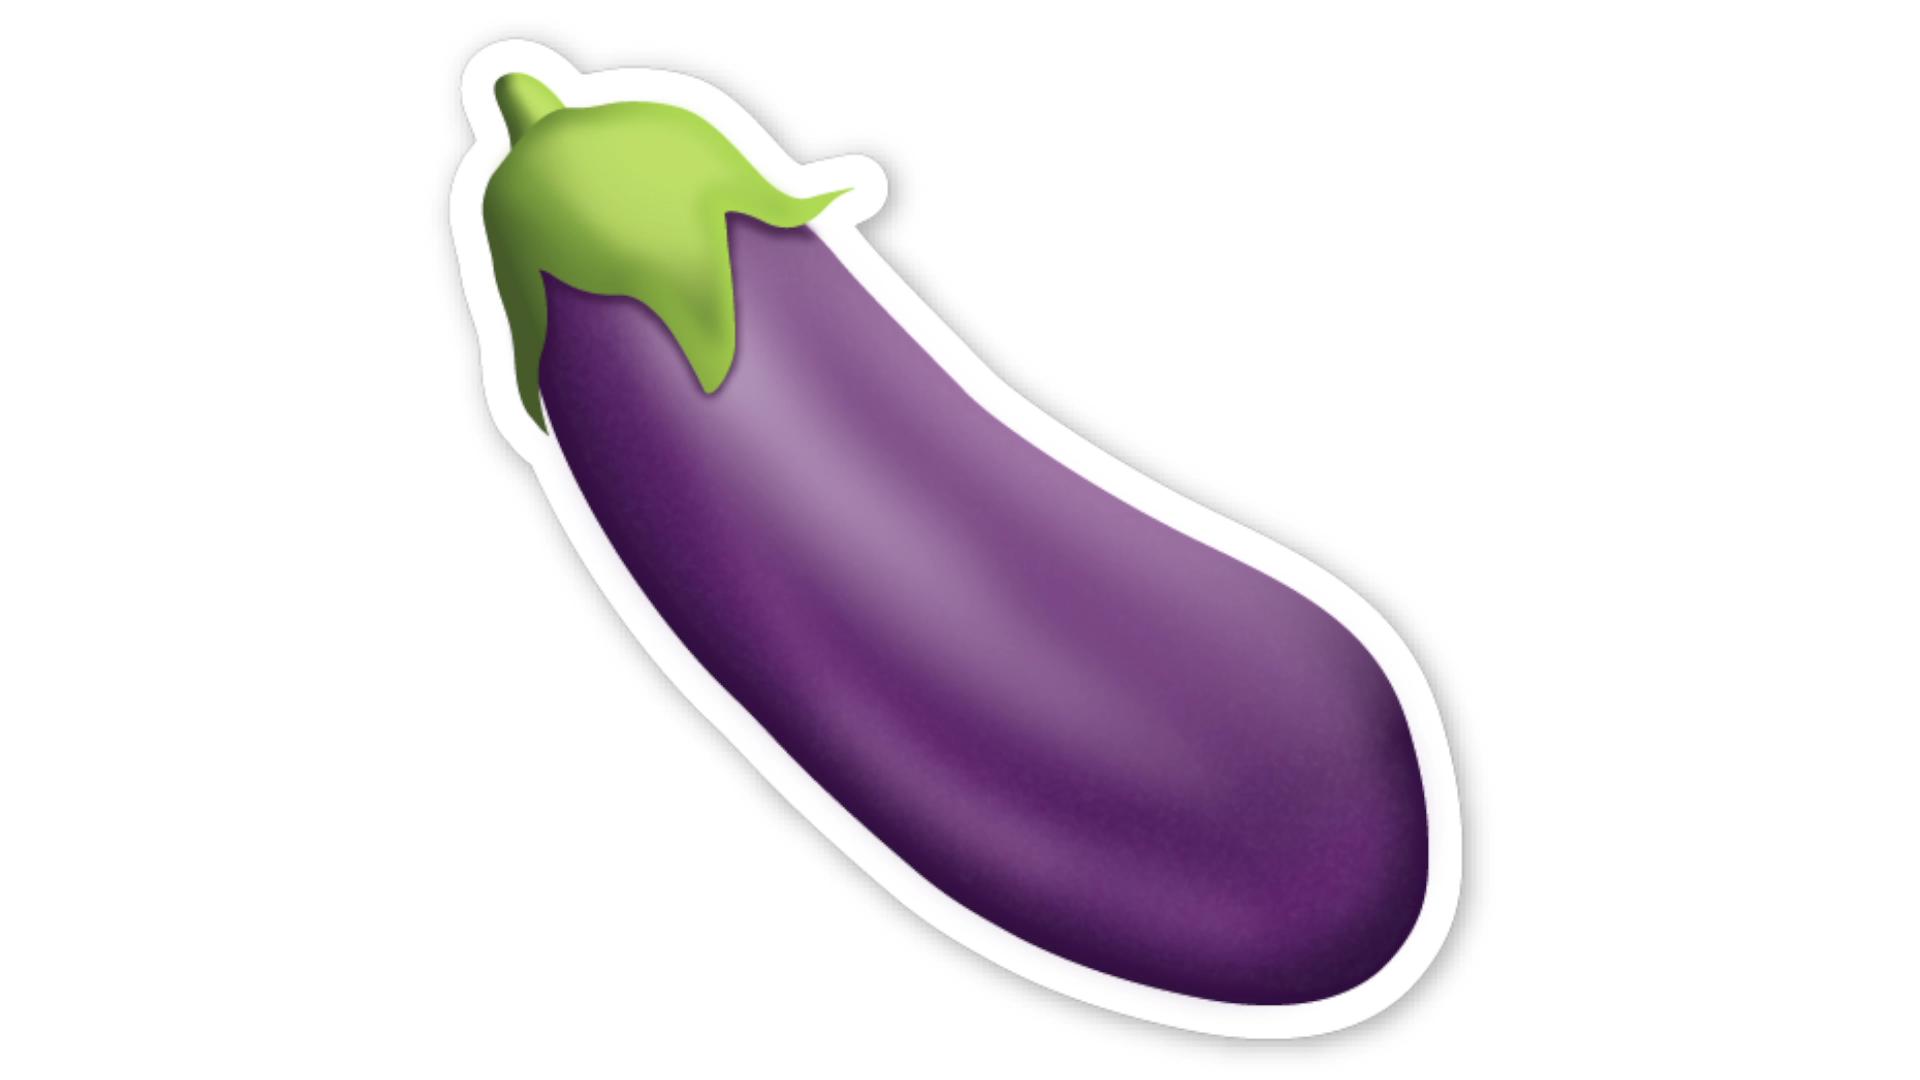 Instagram blocks the eggplant emoji because it's too offensive.